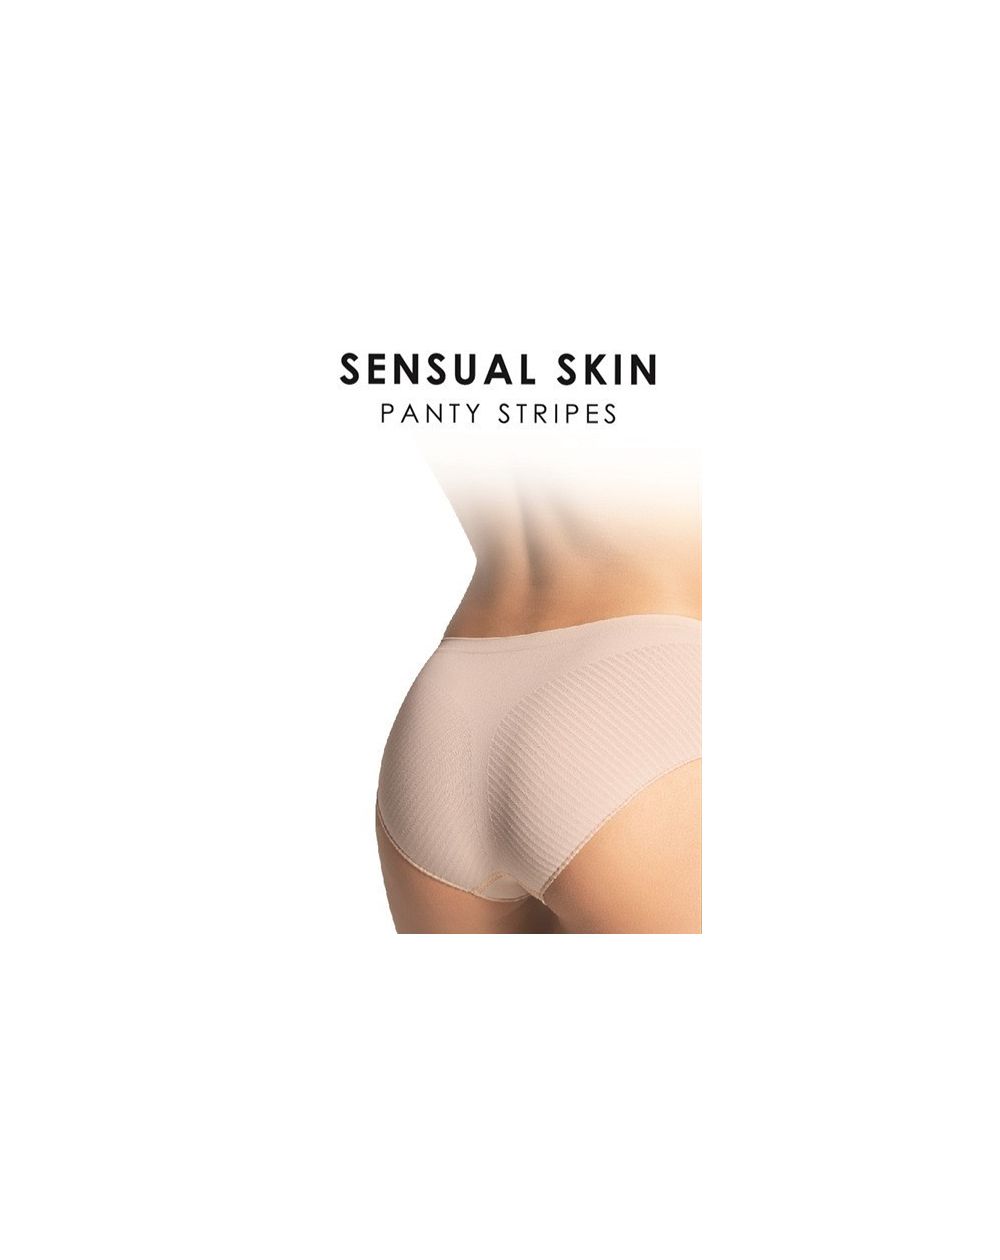 Figi Gatta 41684 Panty Stripes Sensual Skin